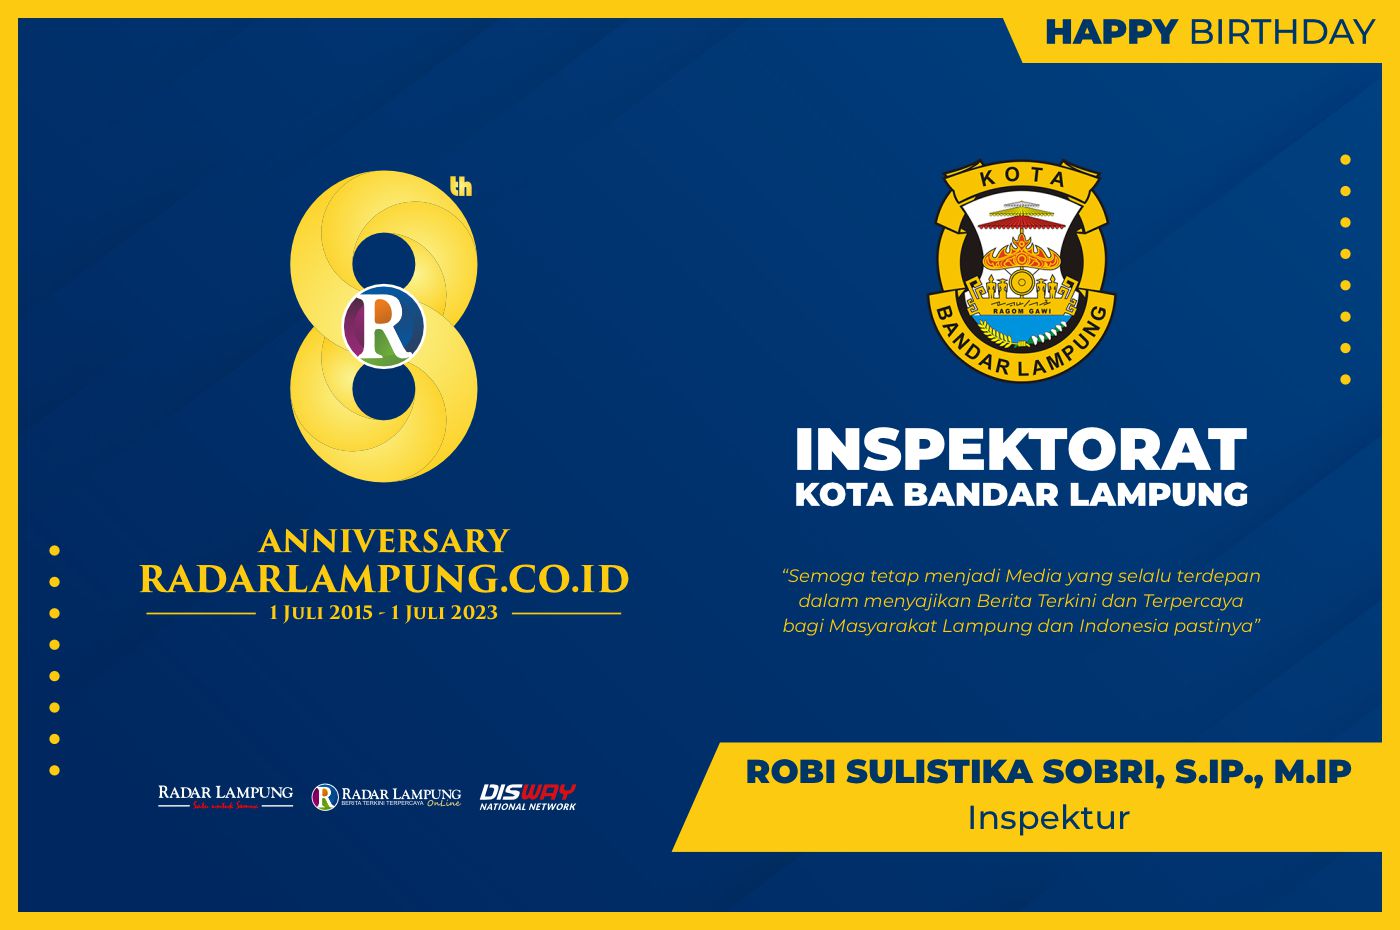 Inspektorat Kota Bandar Lampung: Selamat Ulang Tahun Radar Lampung Online ke-8